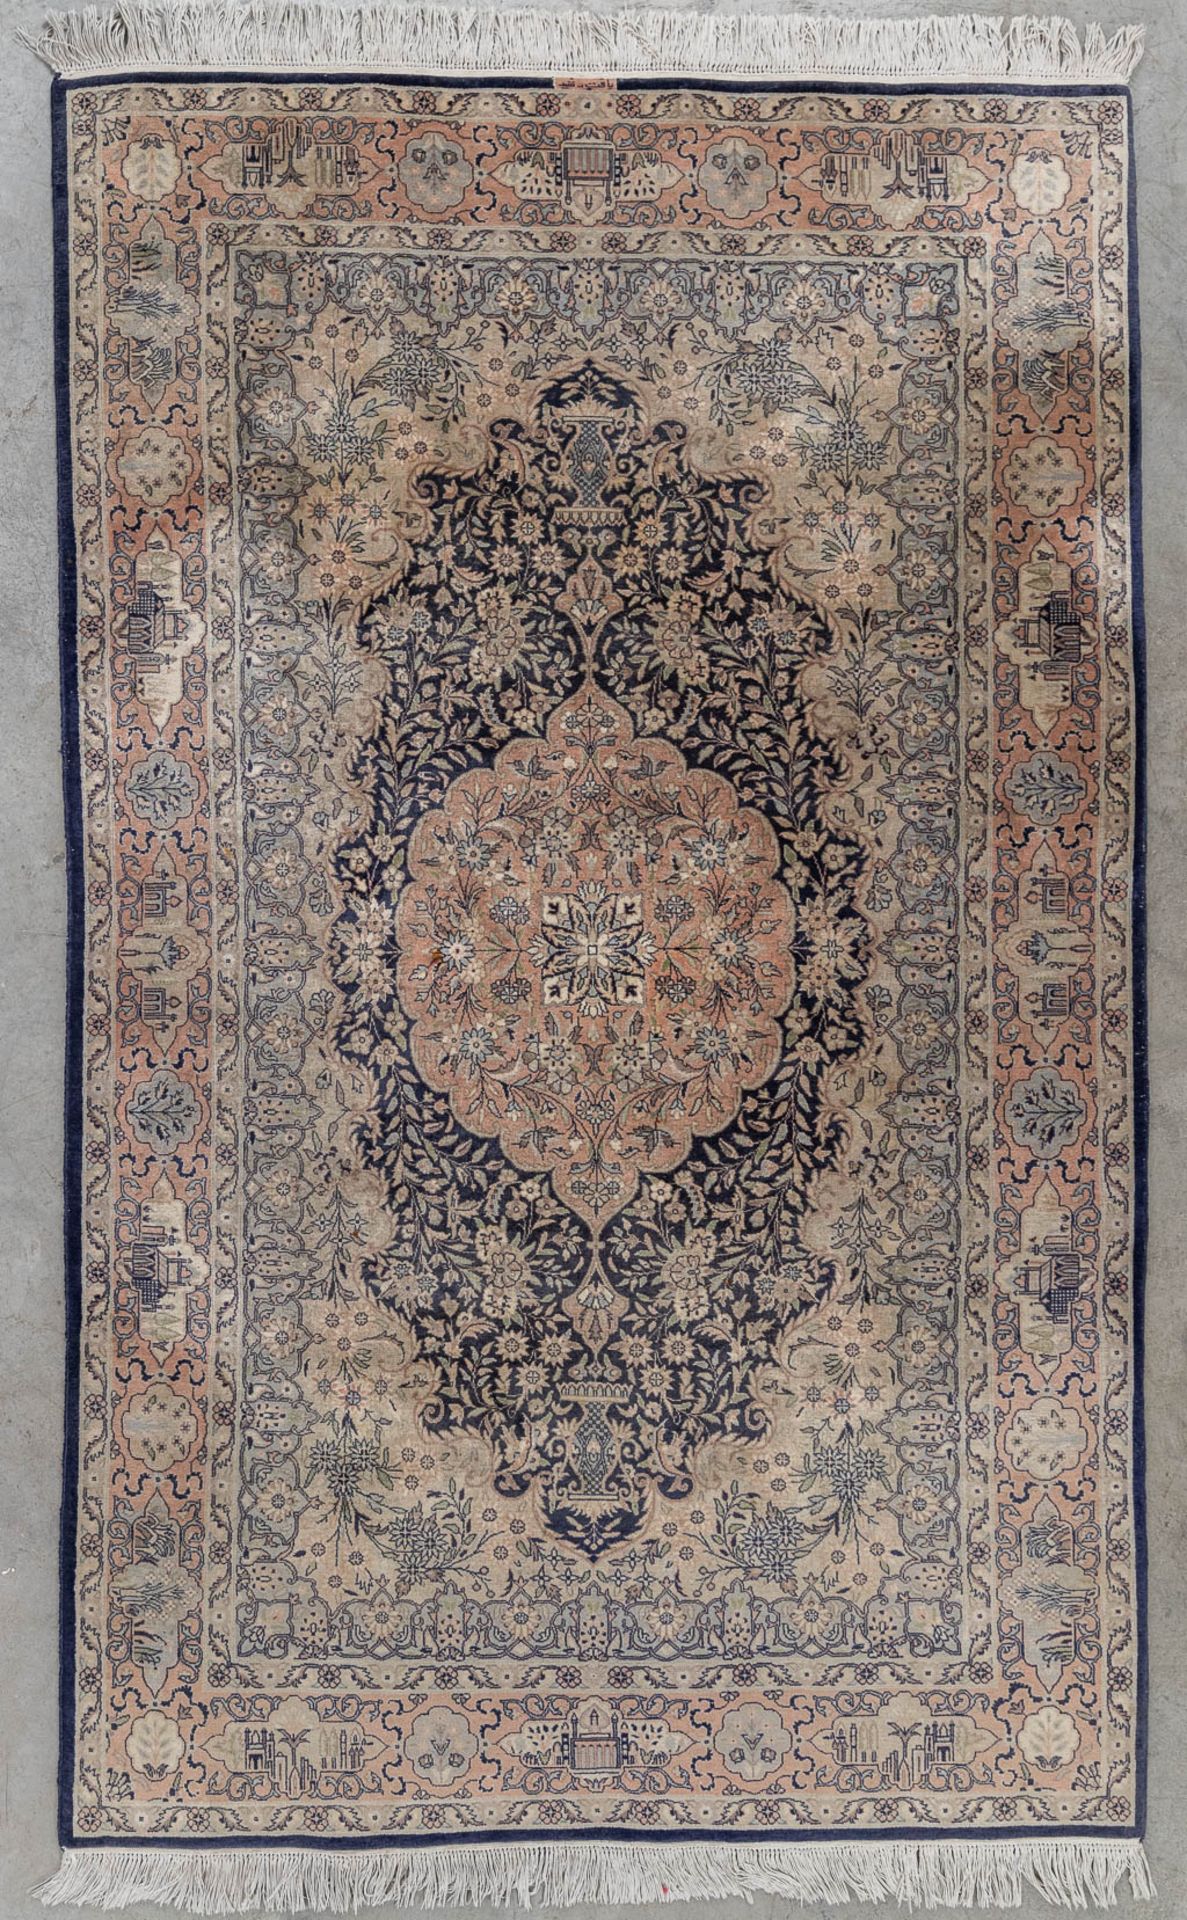 A hand-made Oriental carpet, Mogul, Pakistan. Wool. (D:221 x W:139 cm)